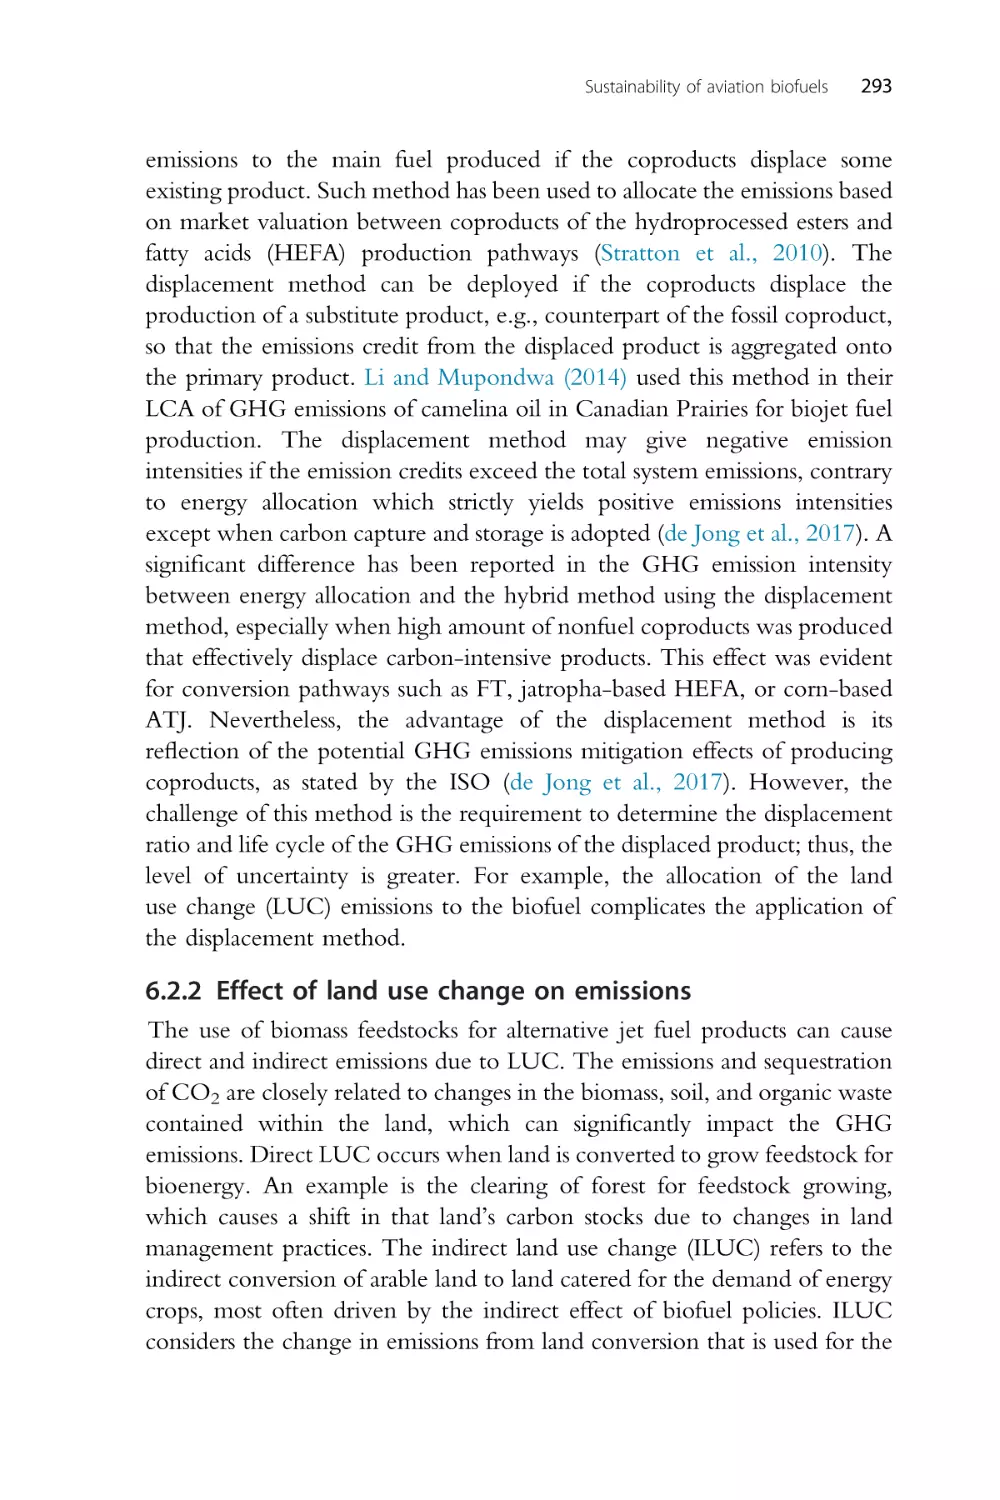 6.2.2 Effect of land use change on emissions